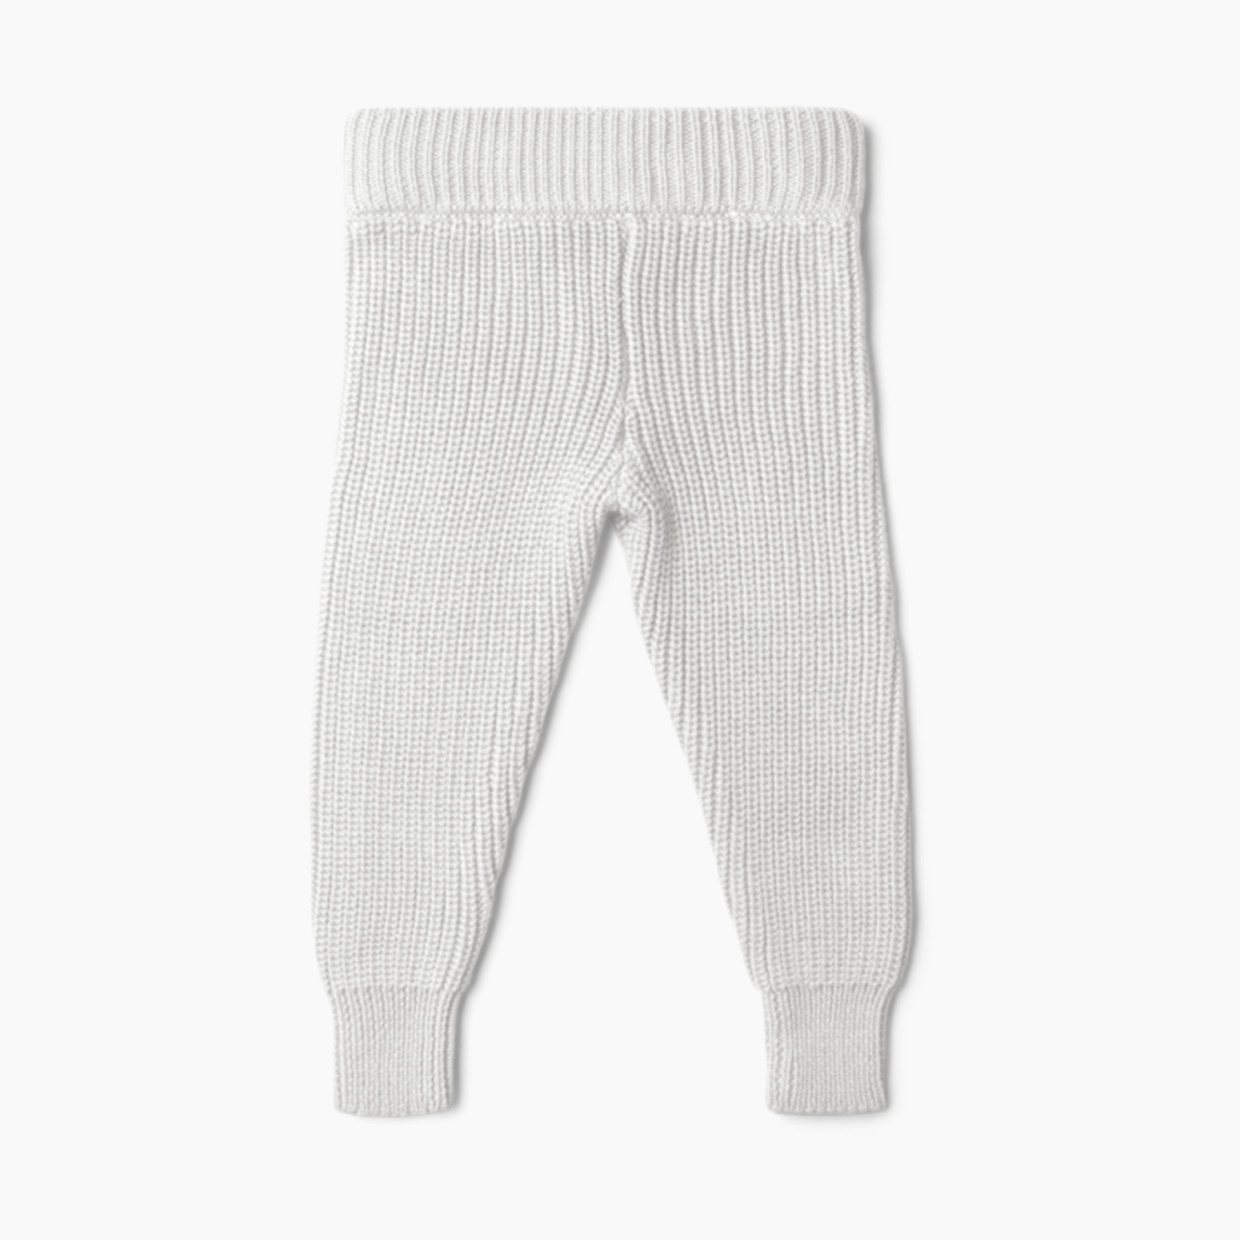 Goumi Kids Organic Cotton Knit Pant - Milk, 18-24 Months.